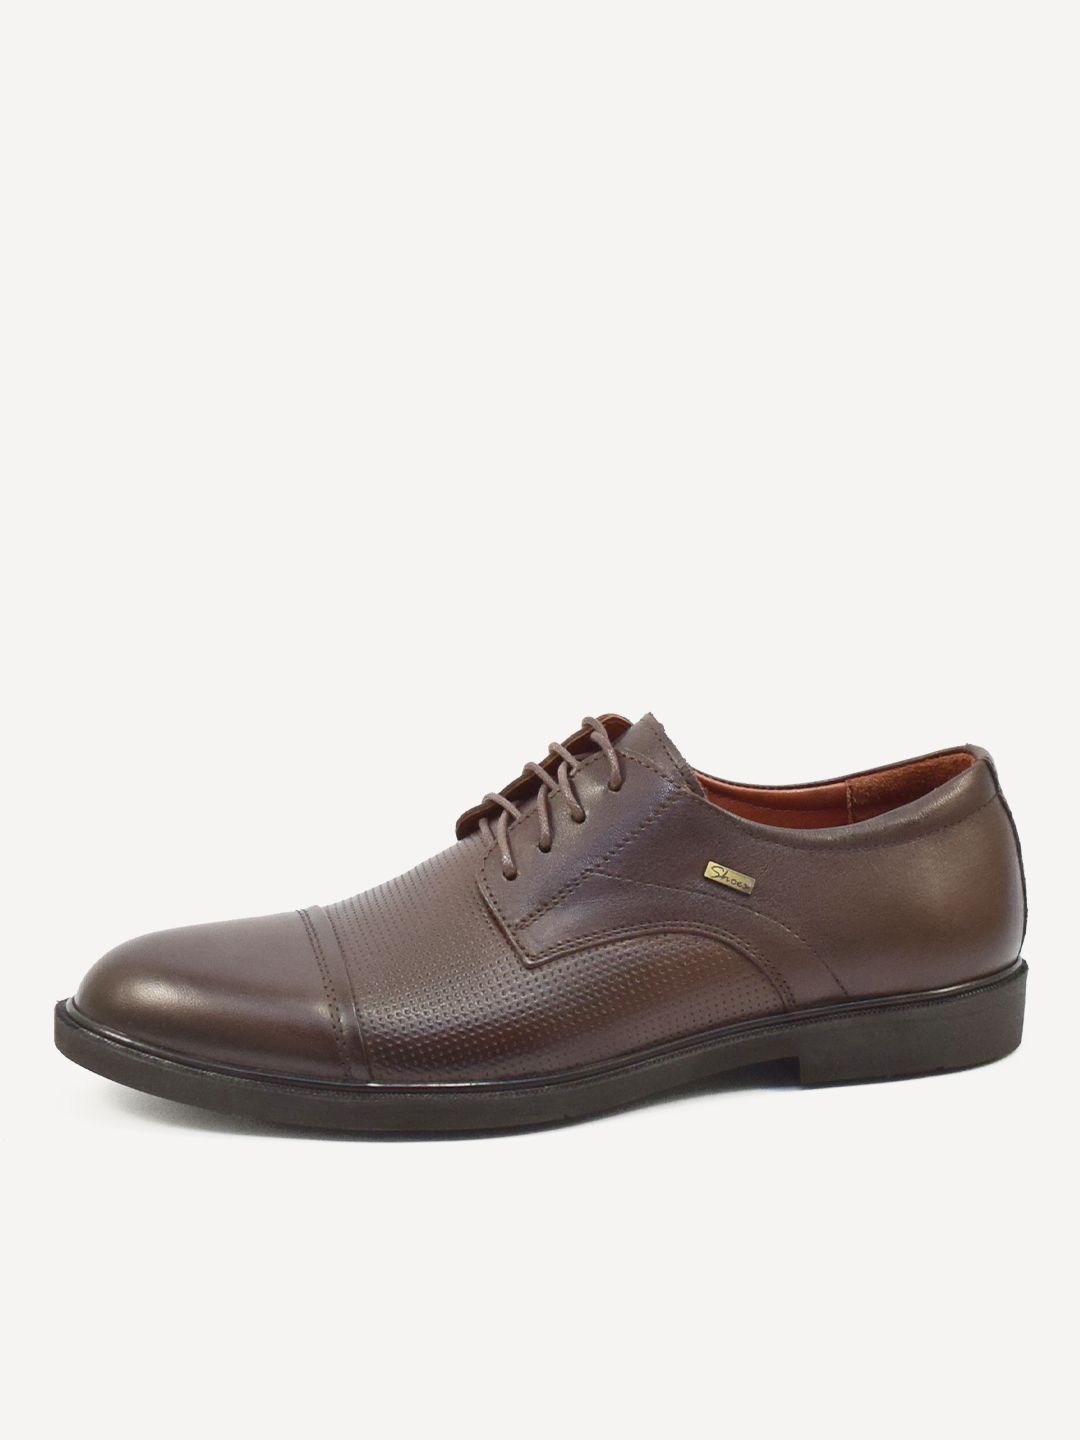 Туфли мужские Baratto 5-541-304-1 коричневые 39 RU